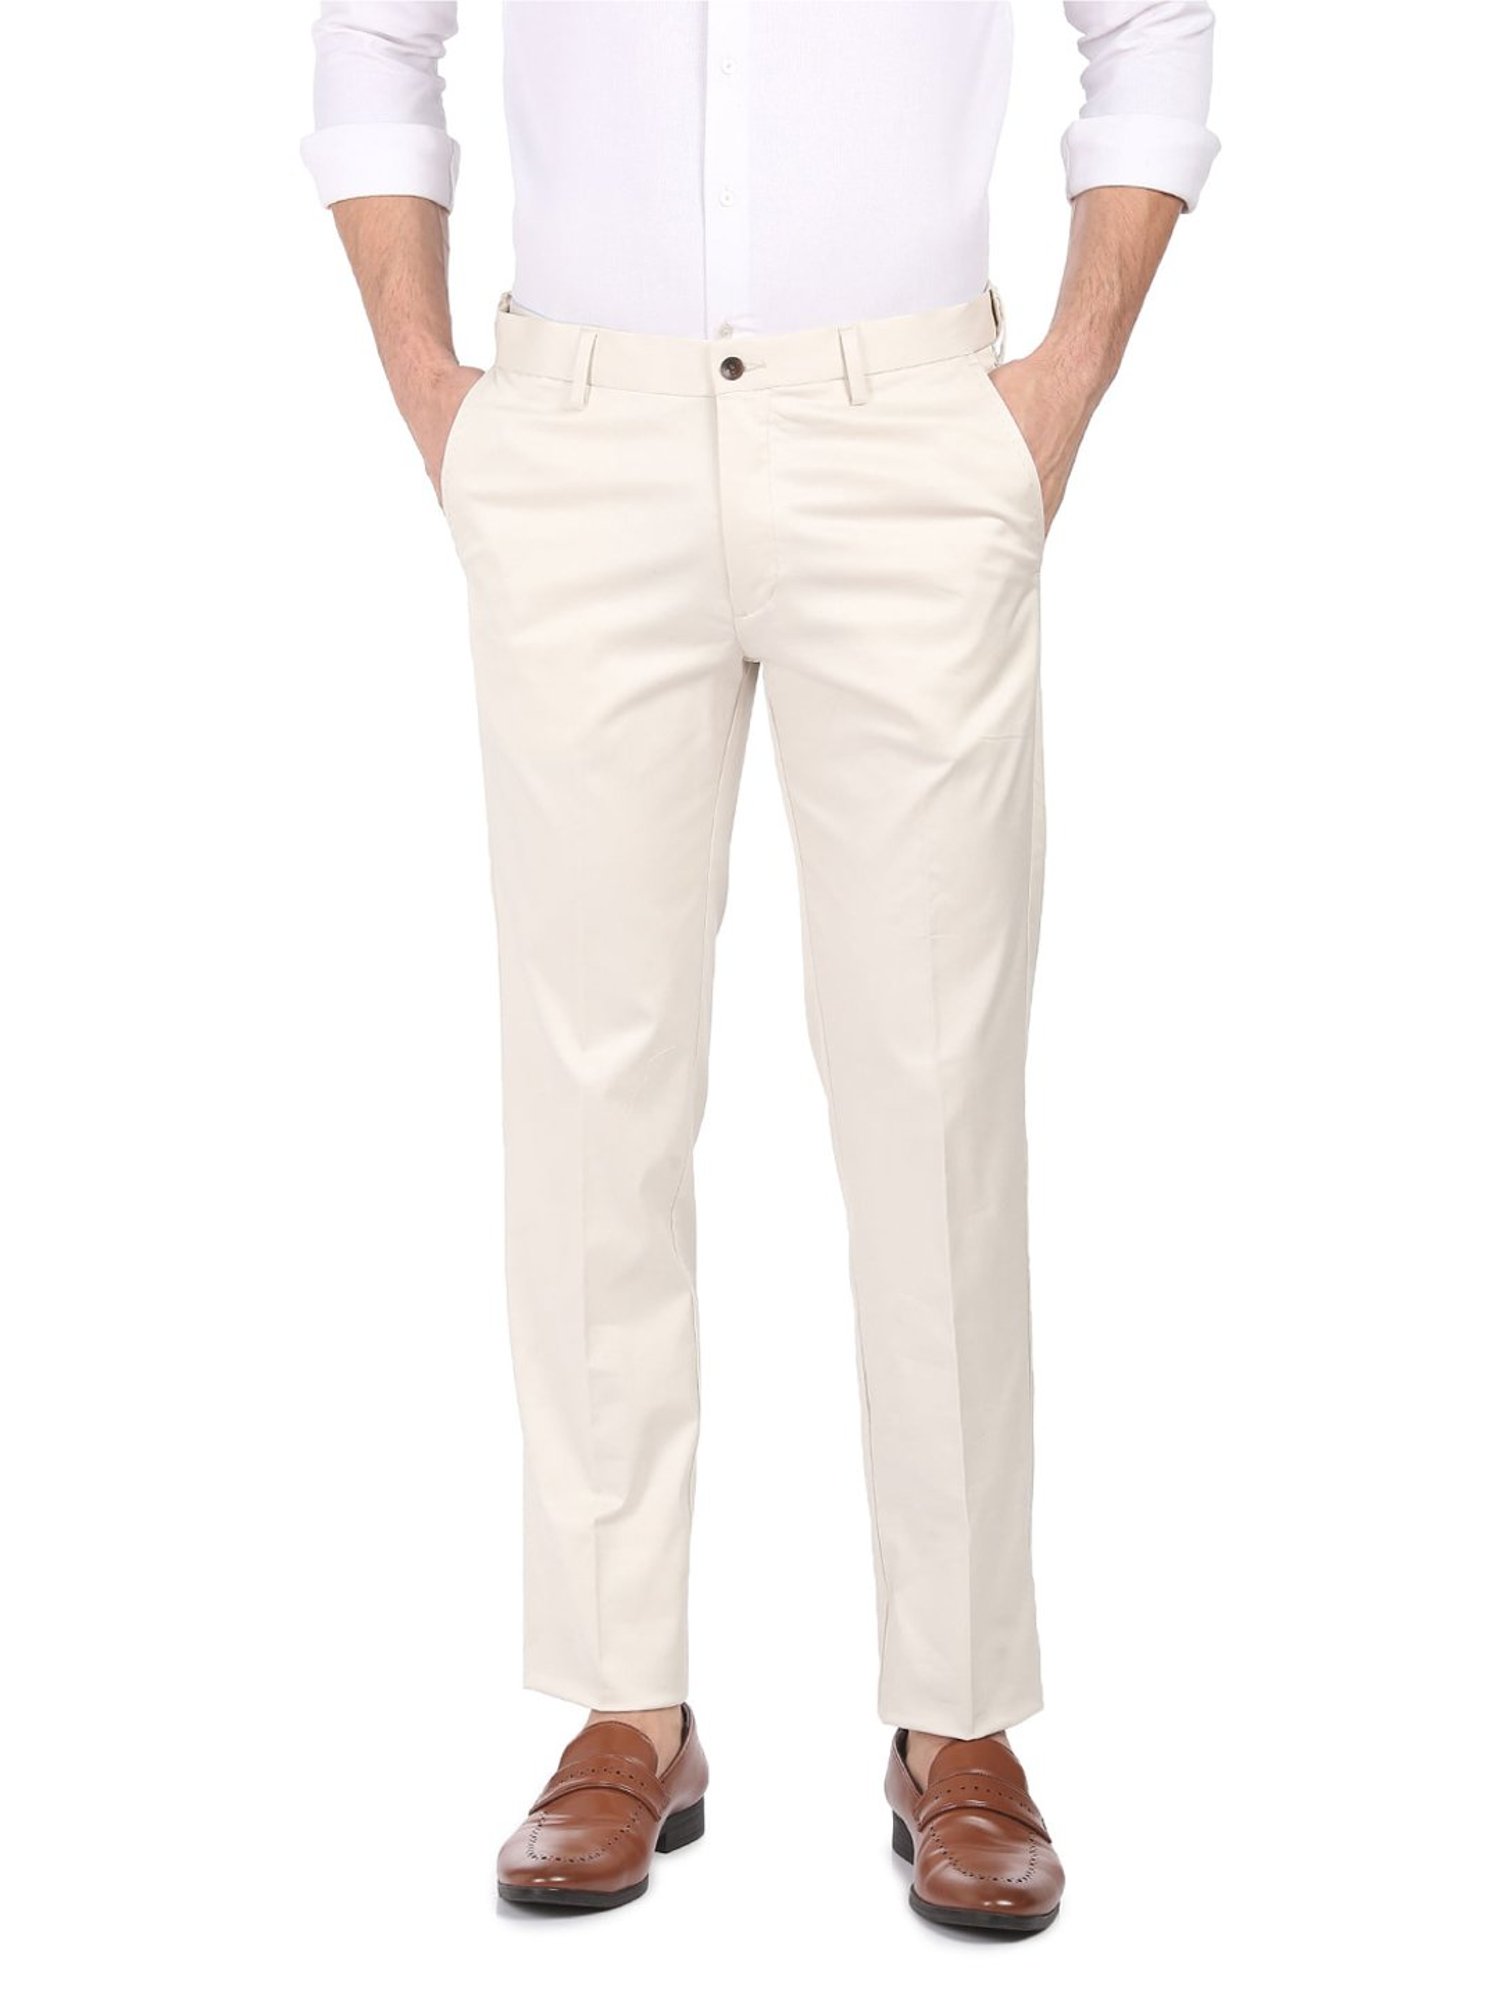 Buy ARROW SPORT Solid Cotton Blend Slim Fit Mens Trousers  Shoppers Stop